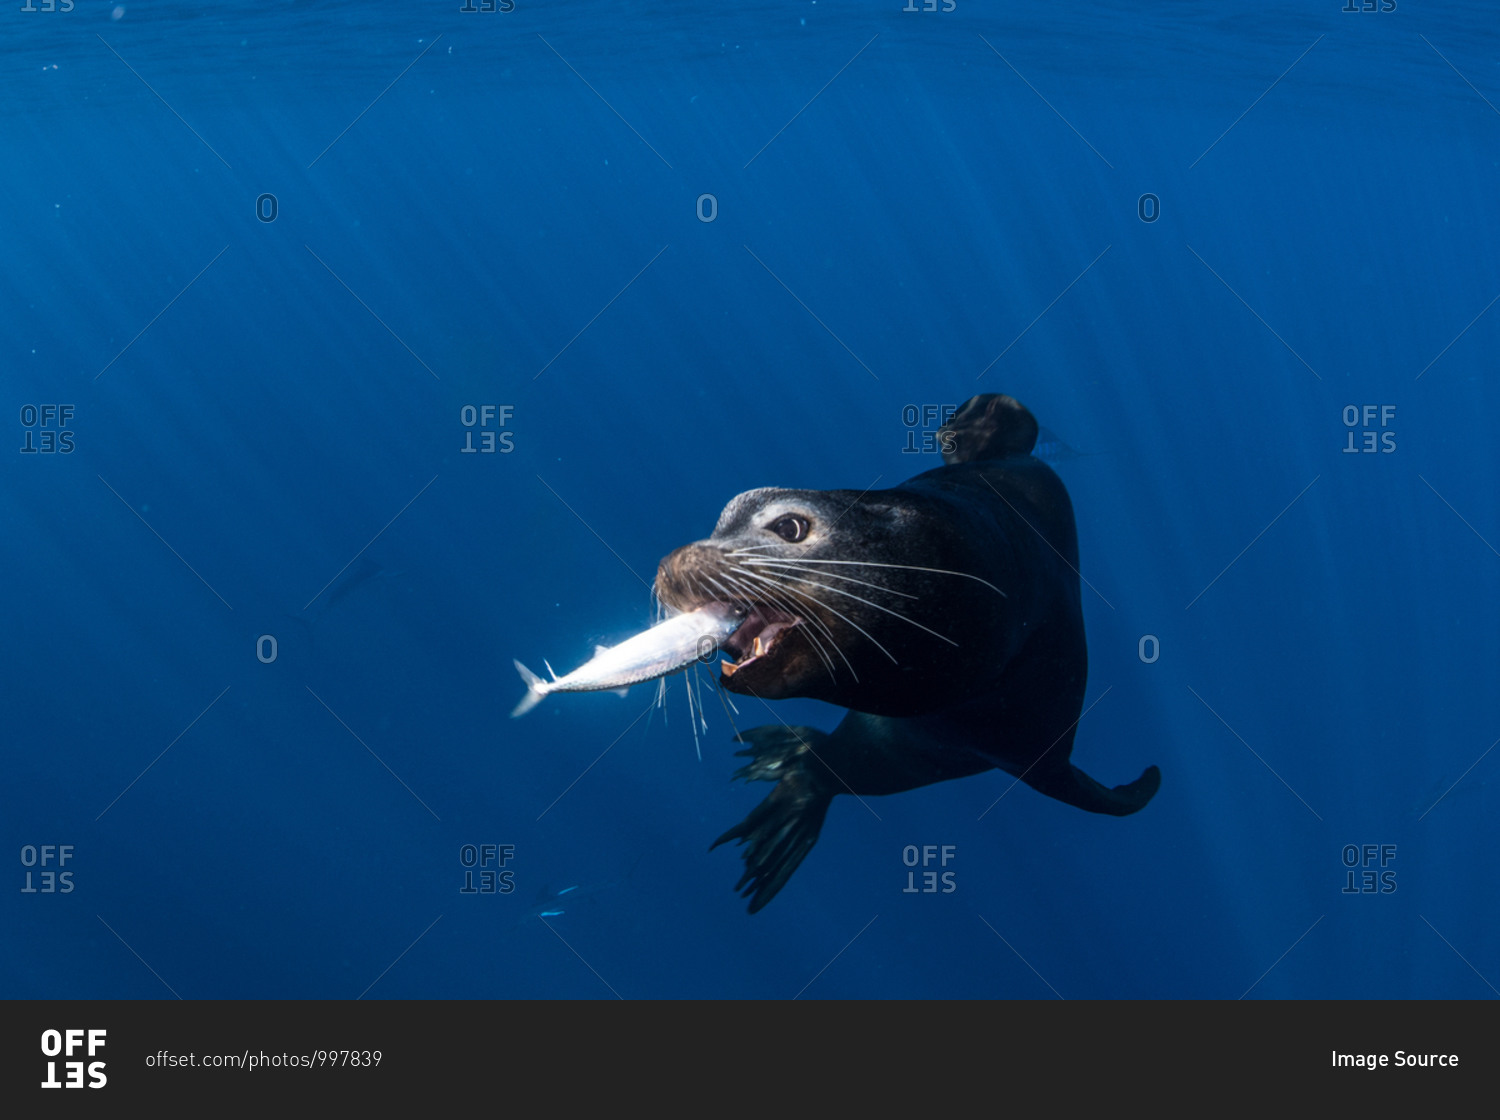 Sea lions hunting and feeding on mackerel baitballs